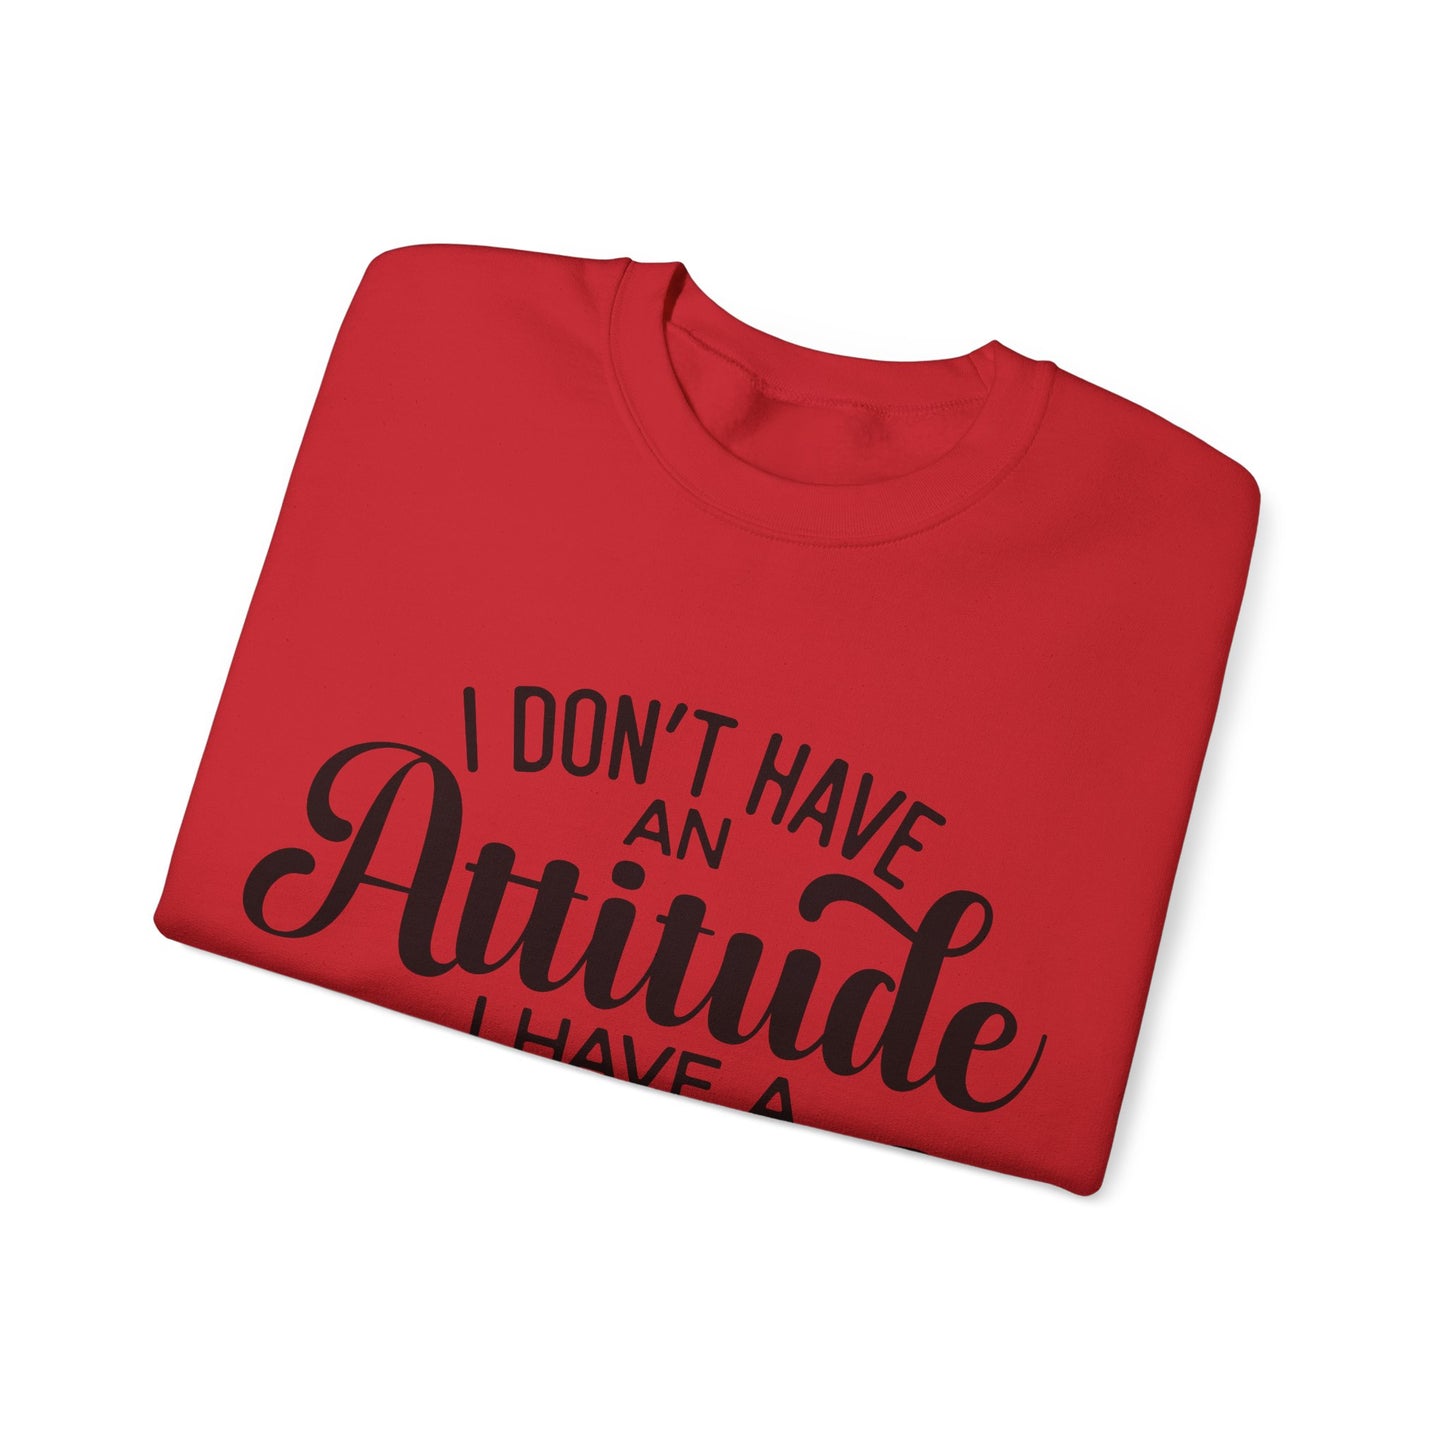 I Don't Have An Attitude-Women's Crew Neck Sweatshirt